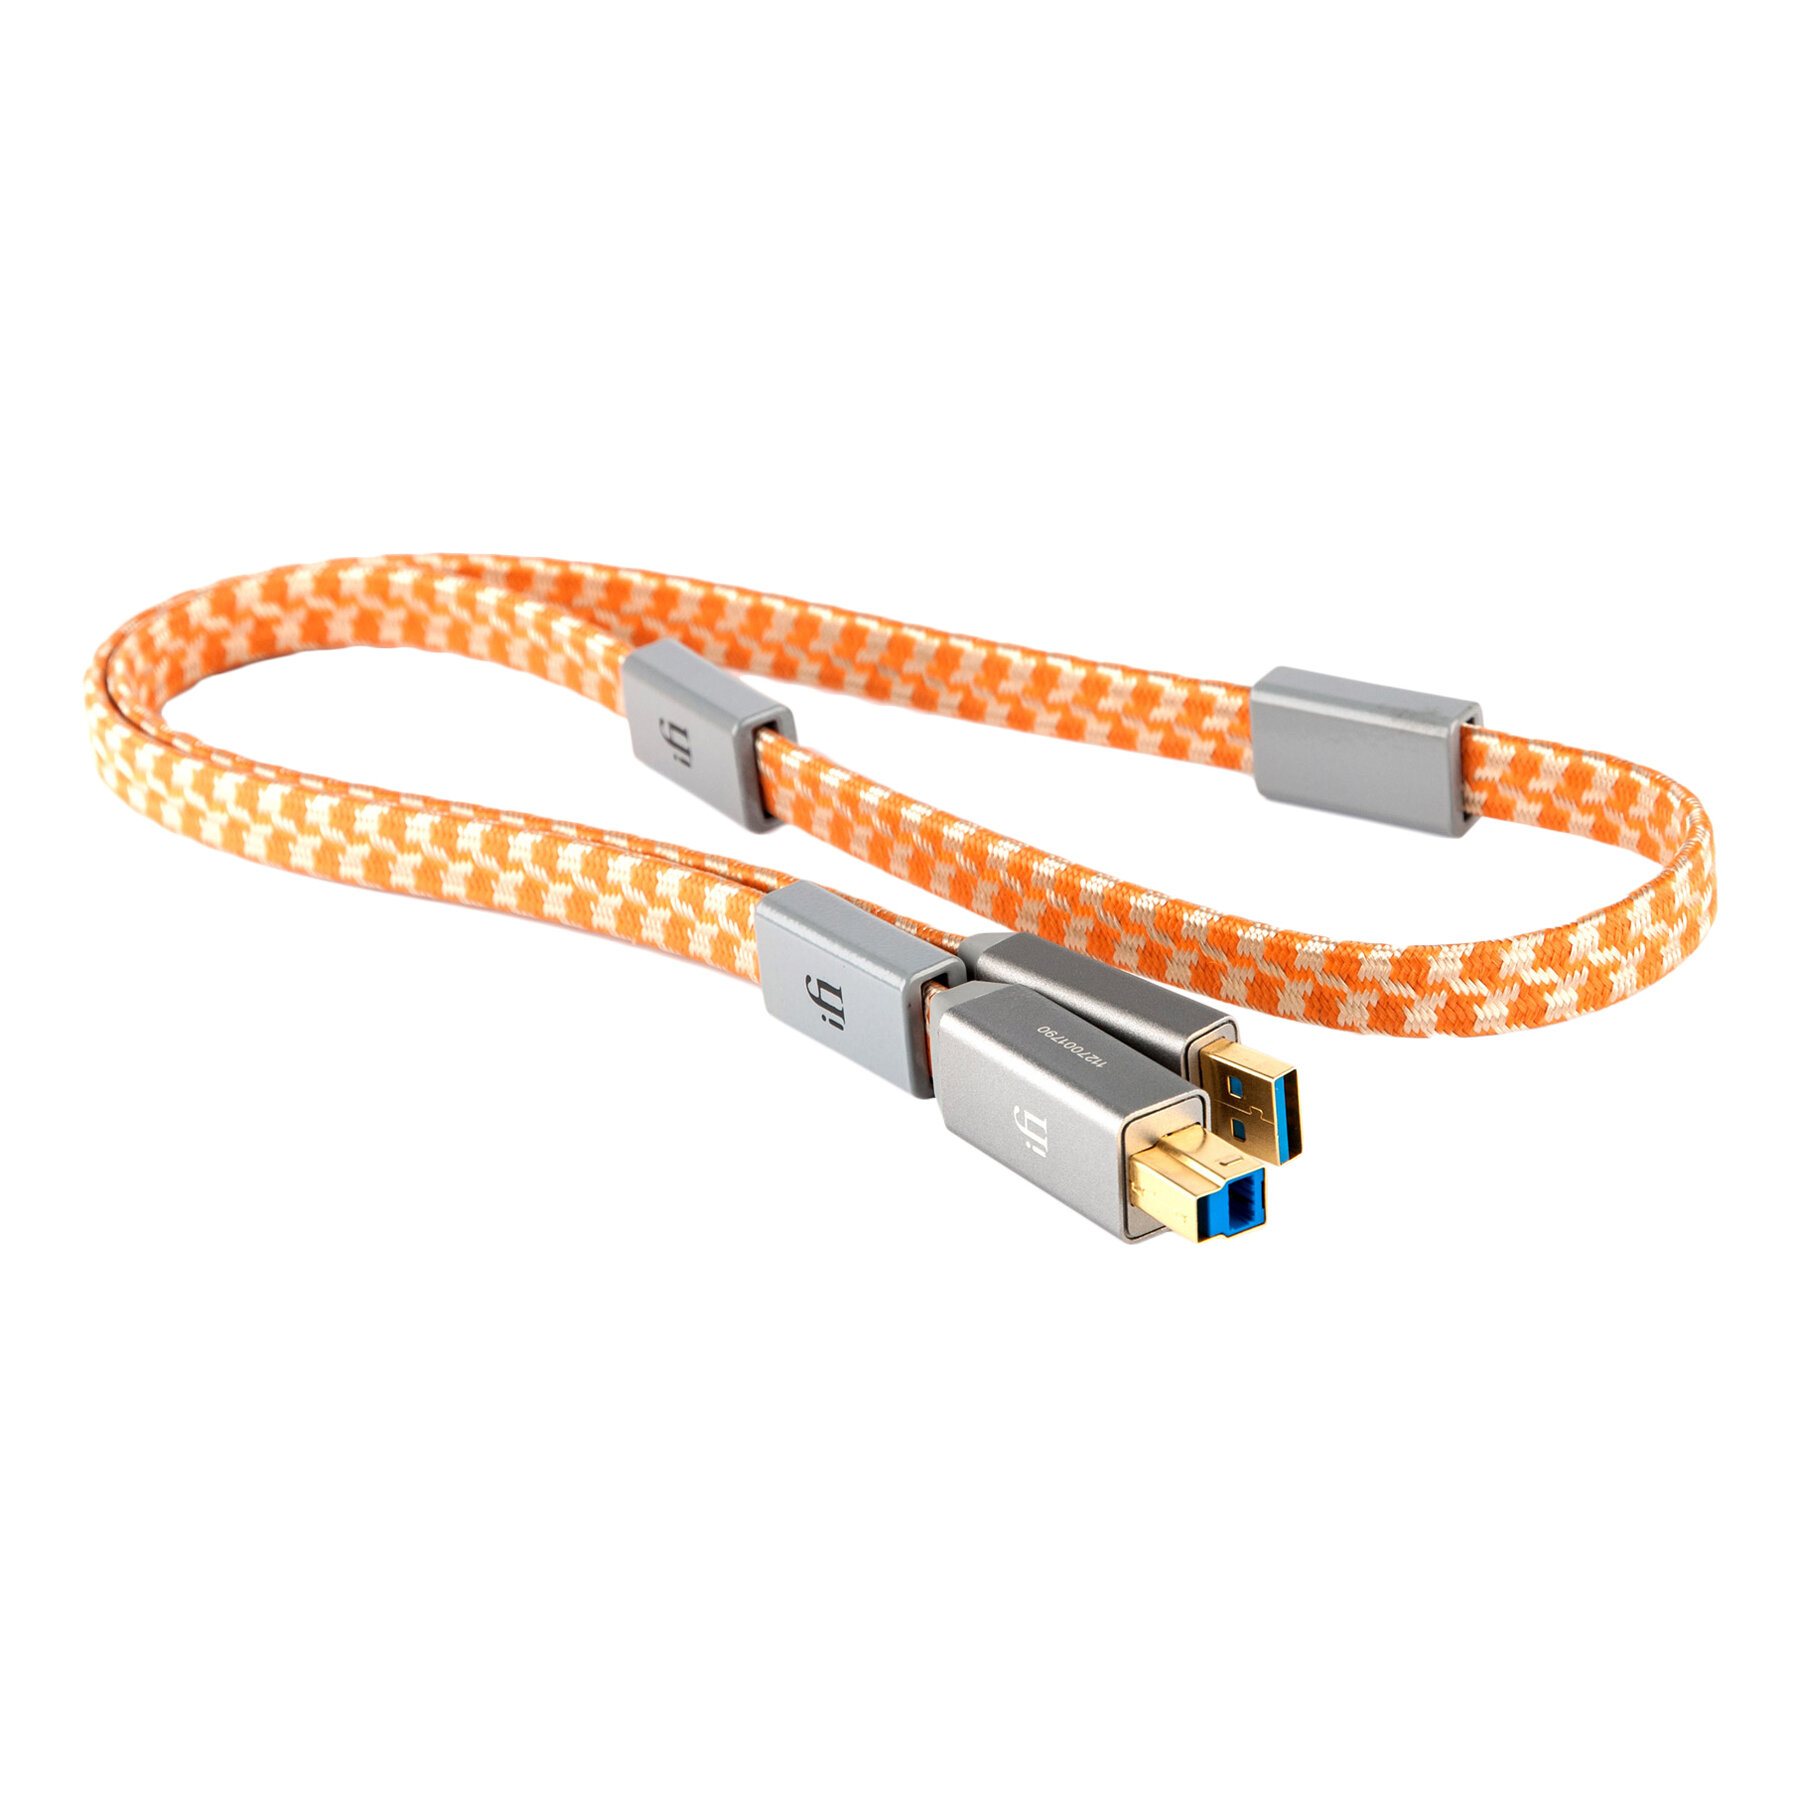 iFi Mercury cable 3.0 (USB 3.0 B connector) 1.0m